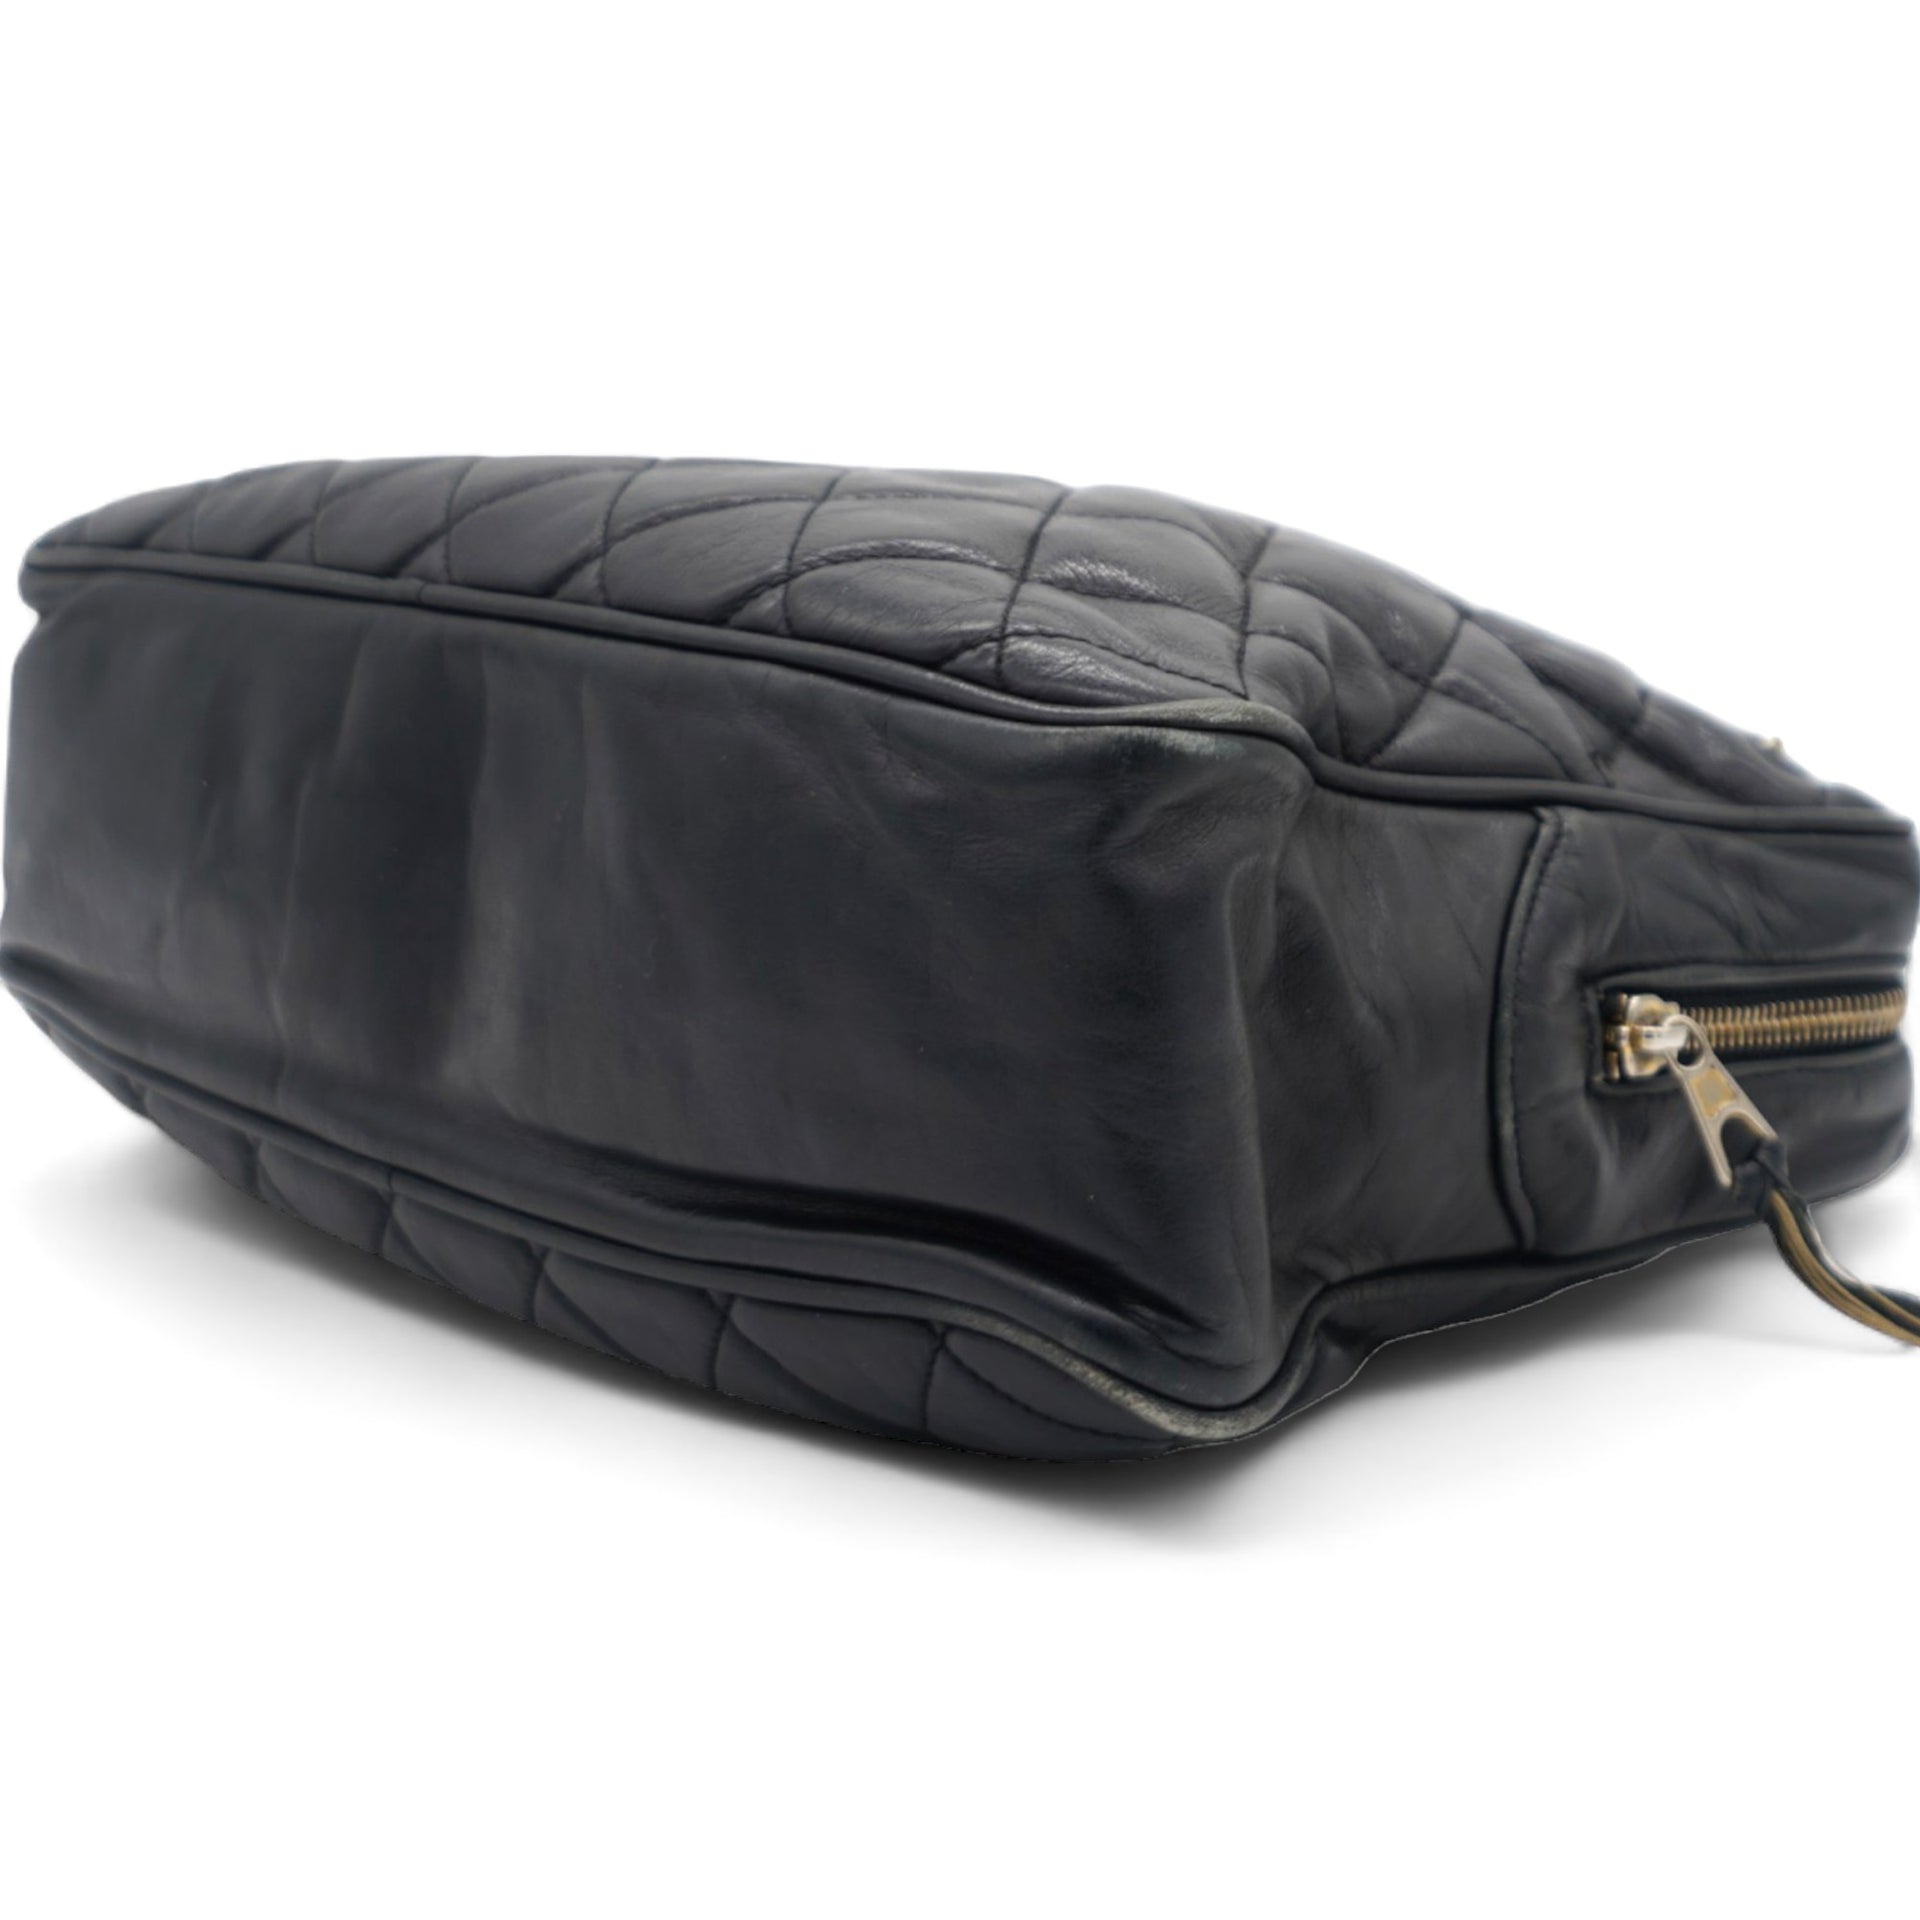 Matelasse Chain Shoulder Women's Caviar Leather Shoulder Bag Black